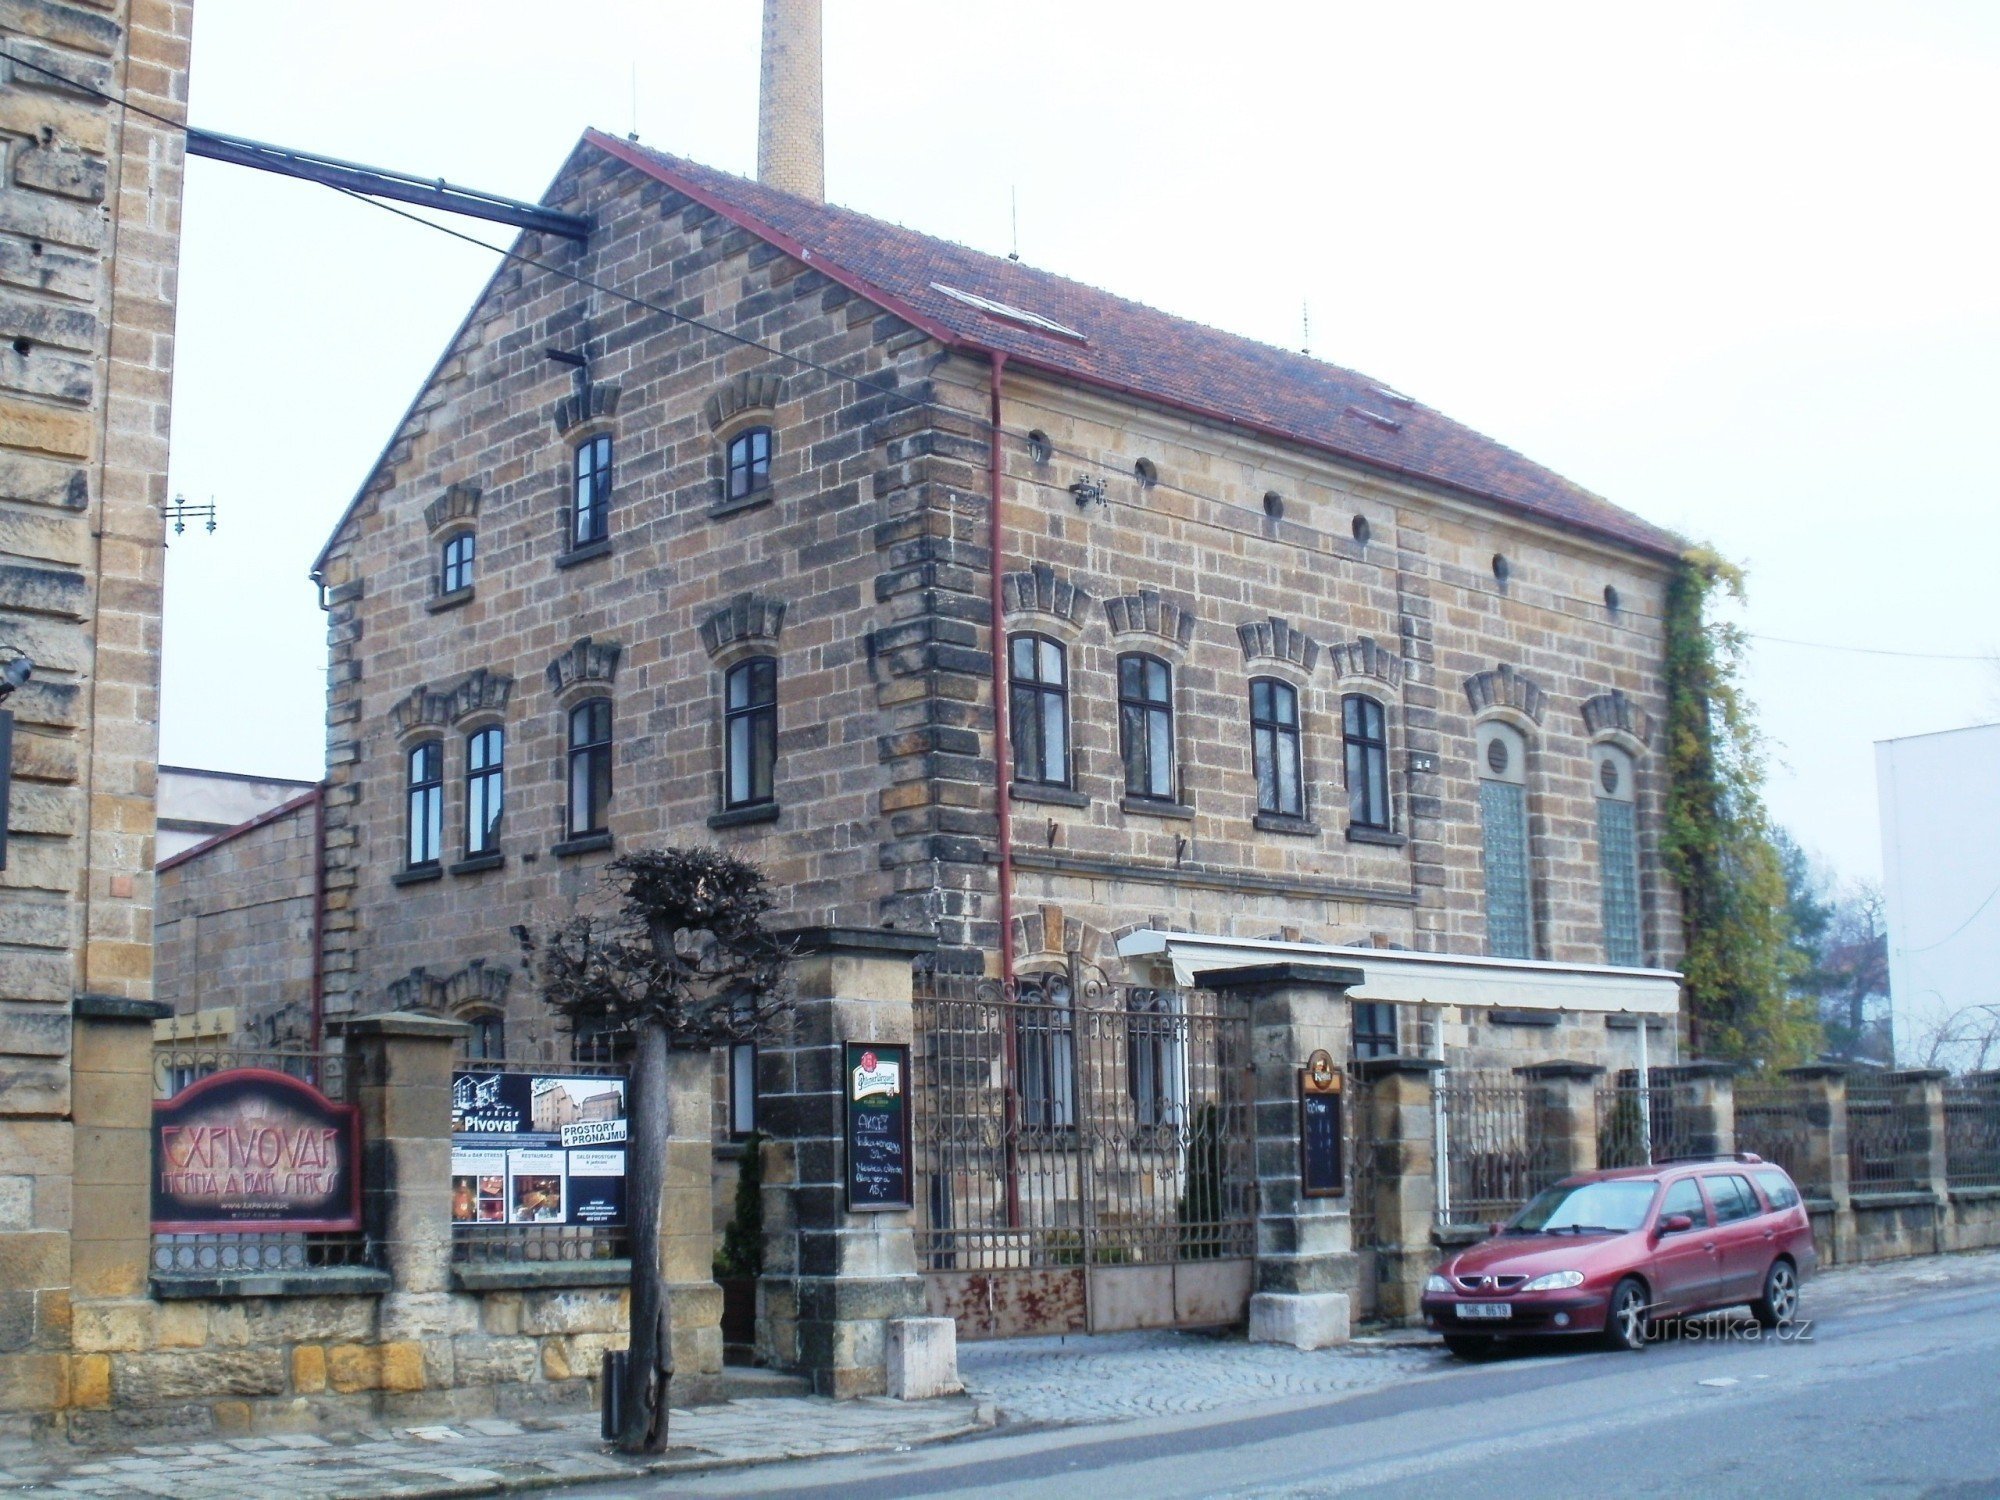 Hořice - Expivovar (former brewery)